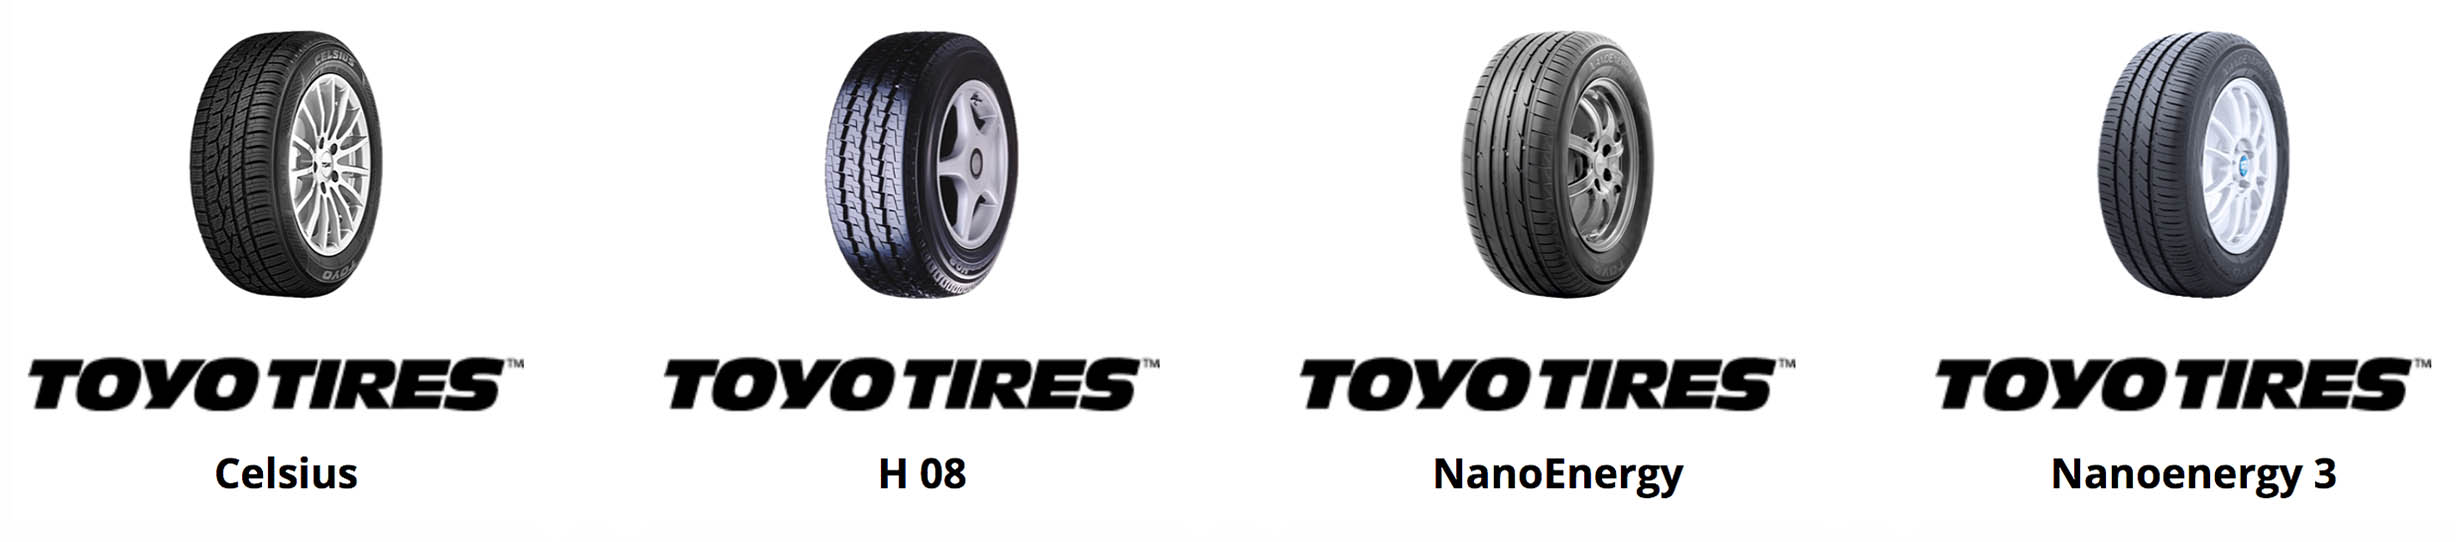 Toyo tyres slide cardiff